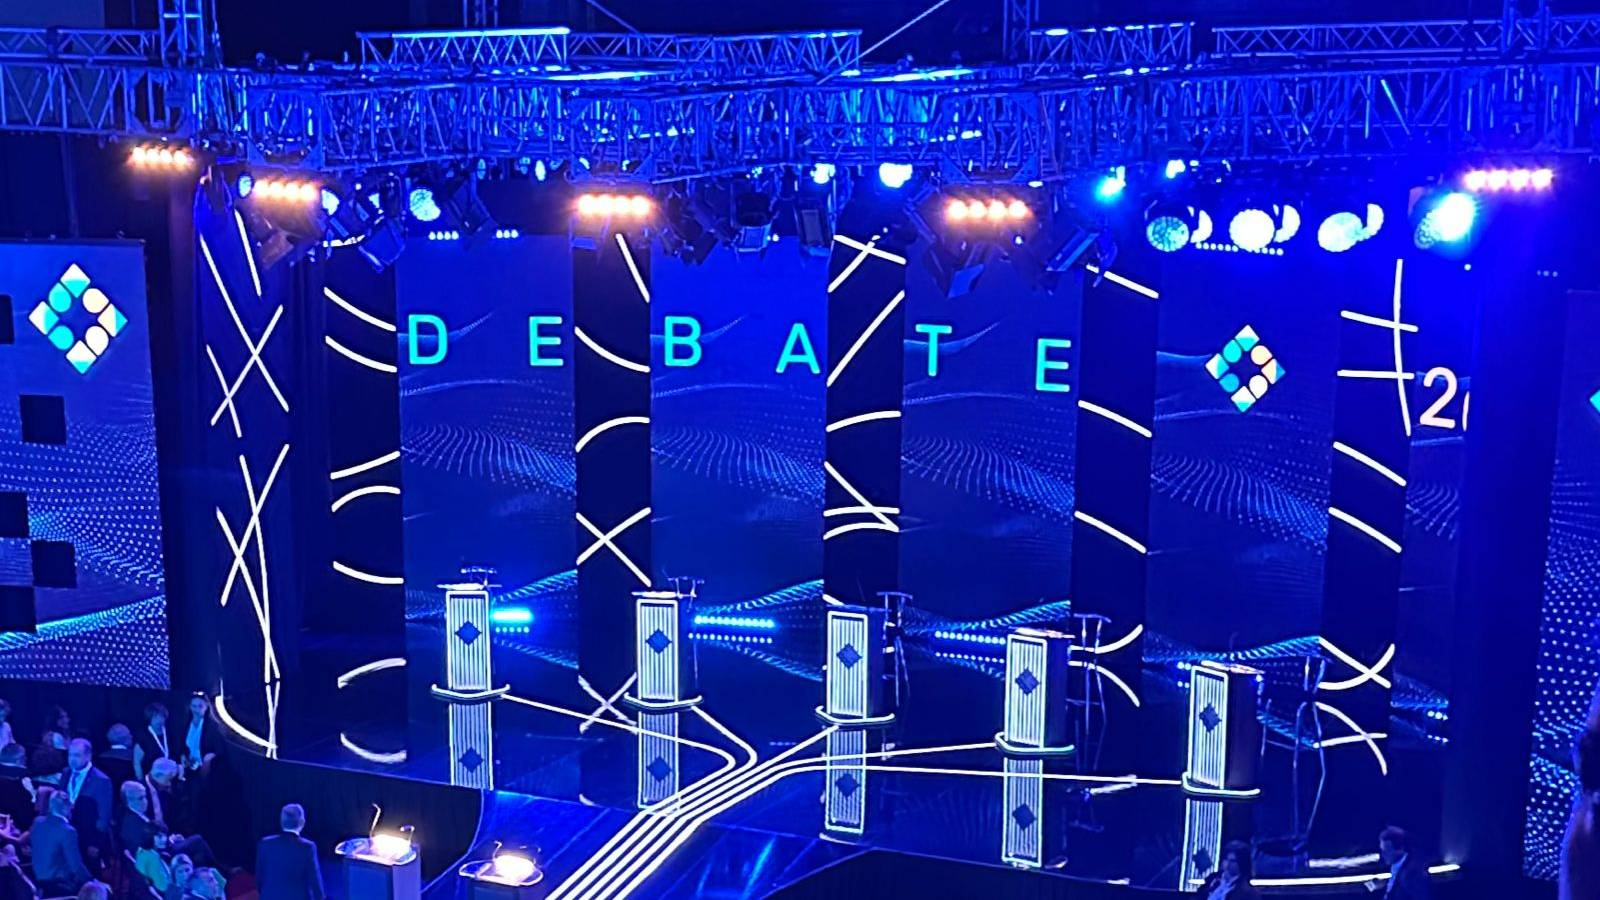 Segundo debate presidencial en Argentina, en vivo: Massa, Milei, Bullrich, Bregman y Schiaretti